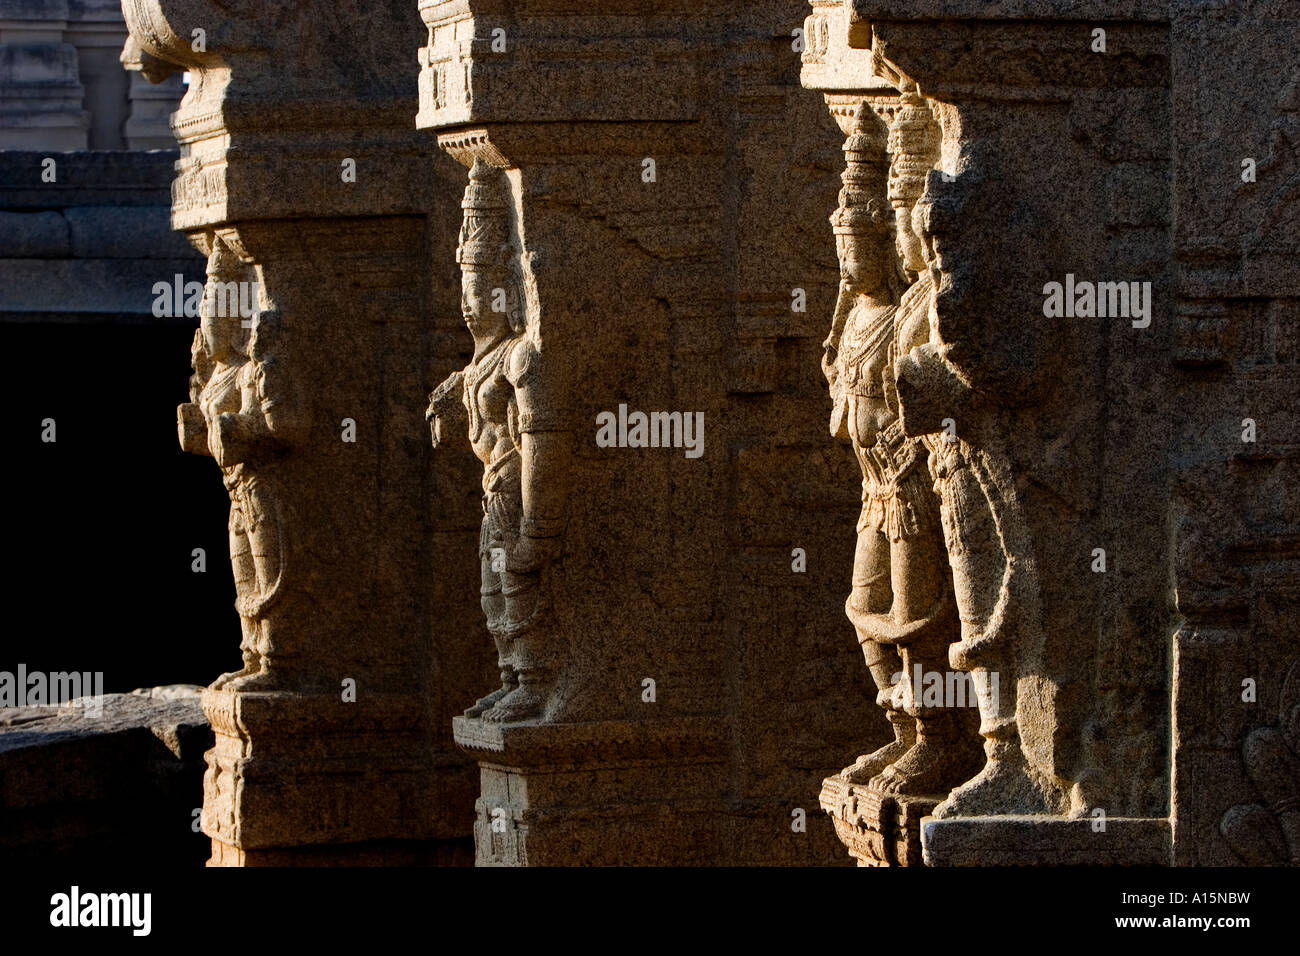 Hindu goddess deities carved into stone pillars at a Veerabhadra Temple in Lepakshi, Andhra Pradesh, India Stock Photo